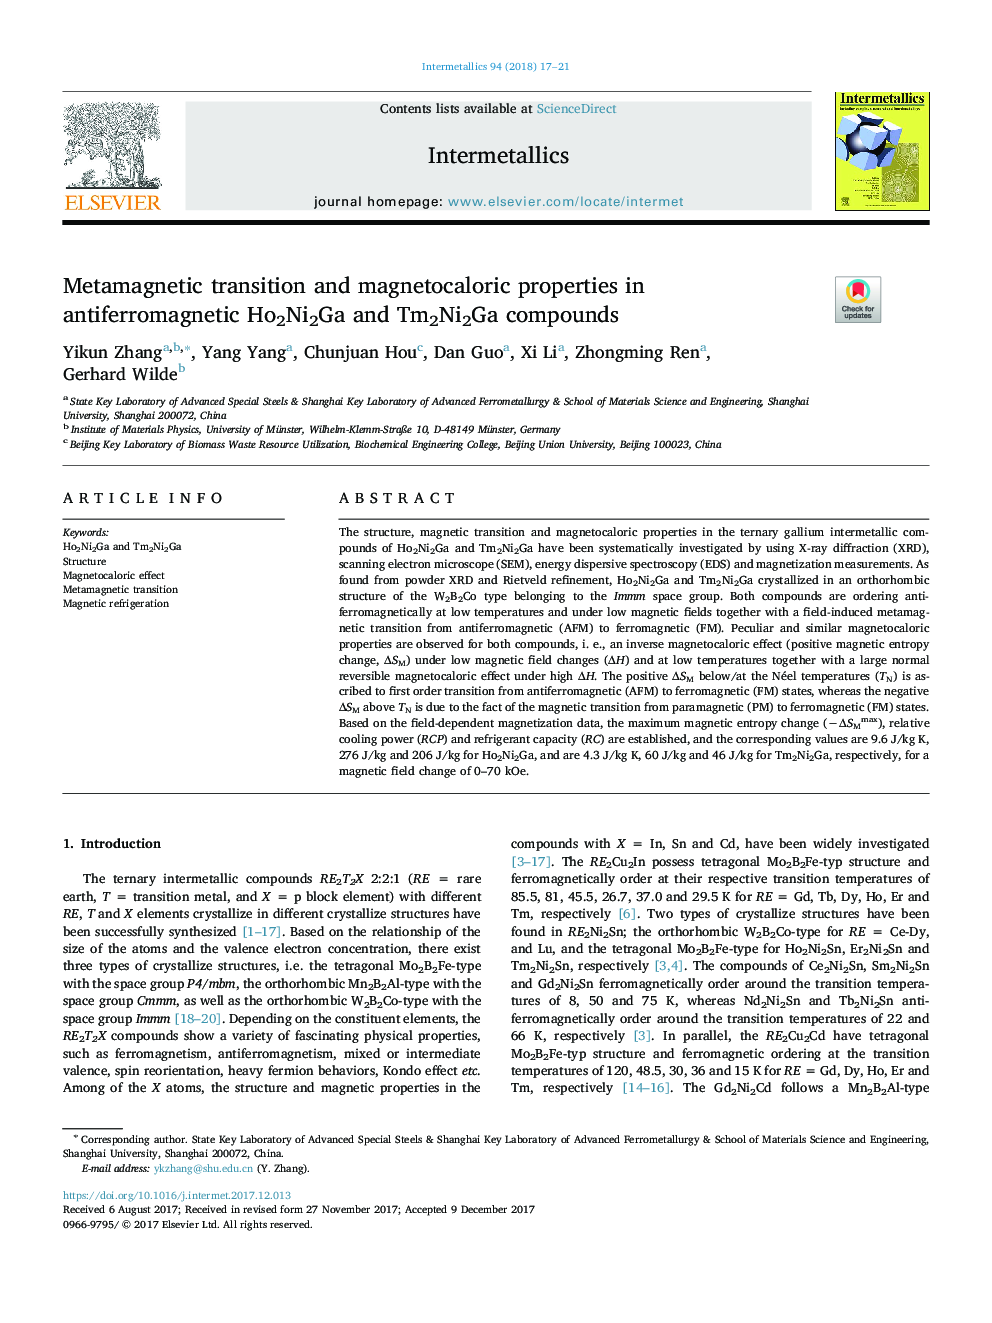 Metamagnetic transition and magnetocaloric properties in antiferromagnetic Ho2Ni2Ga and Tm2Ni2Ga compounds